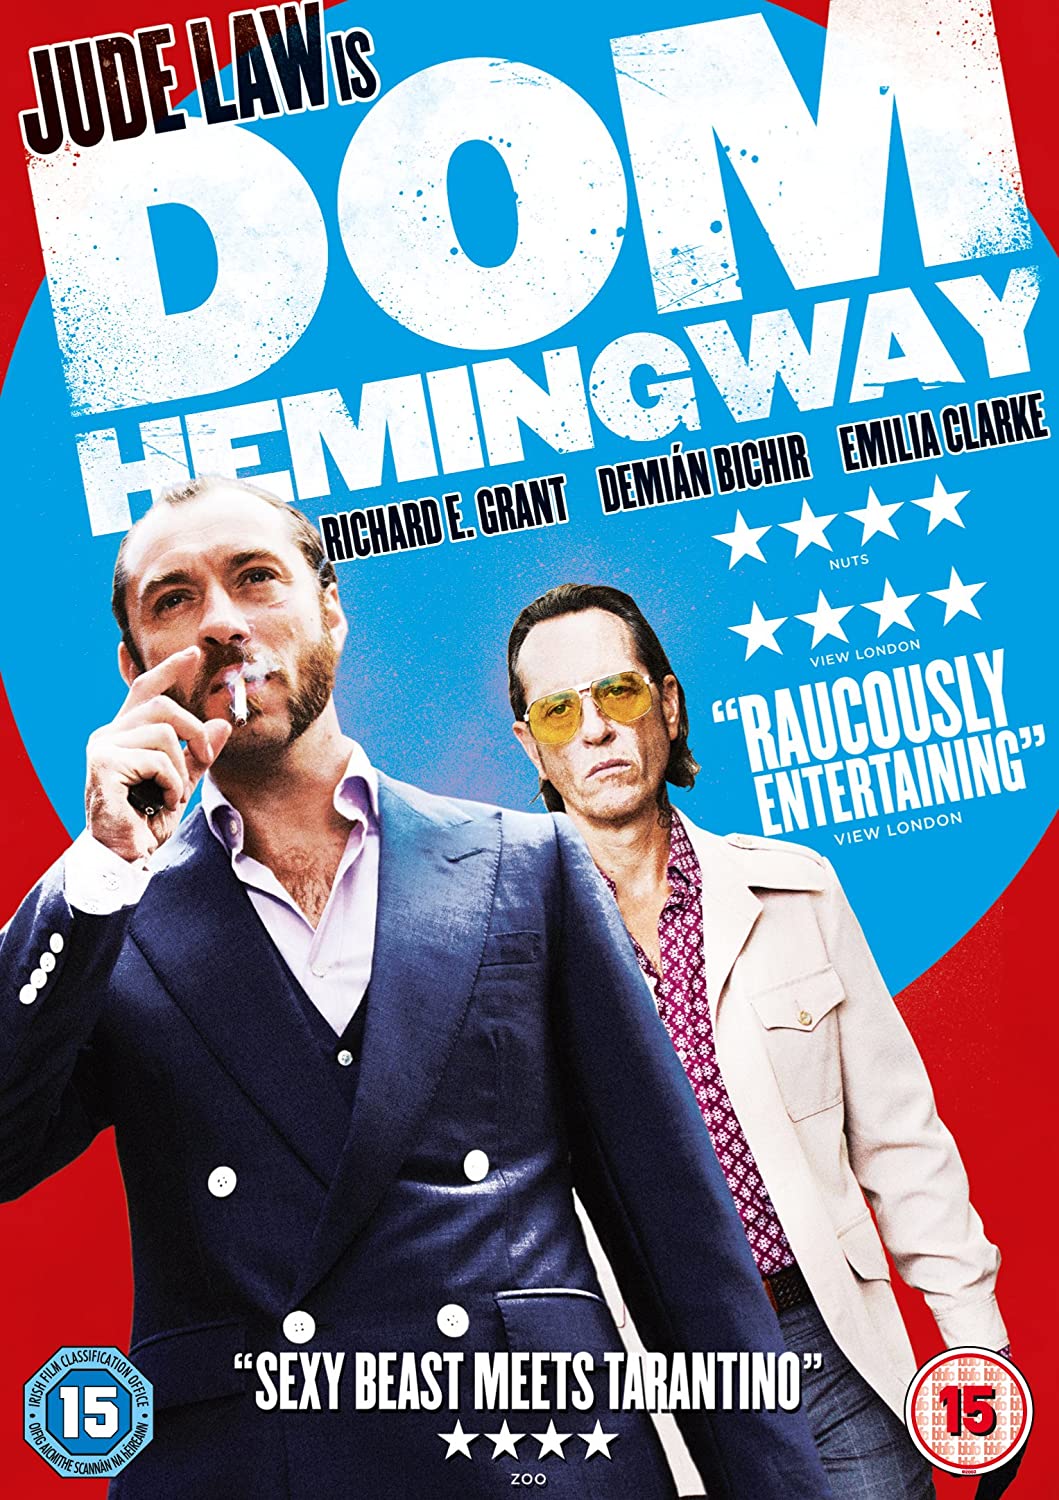 Dom Hemingway [2013] - Drama/Comedy [DVD]